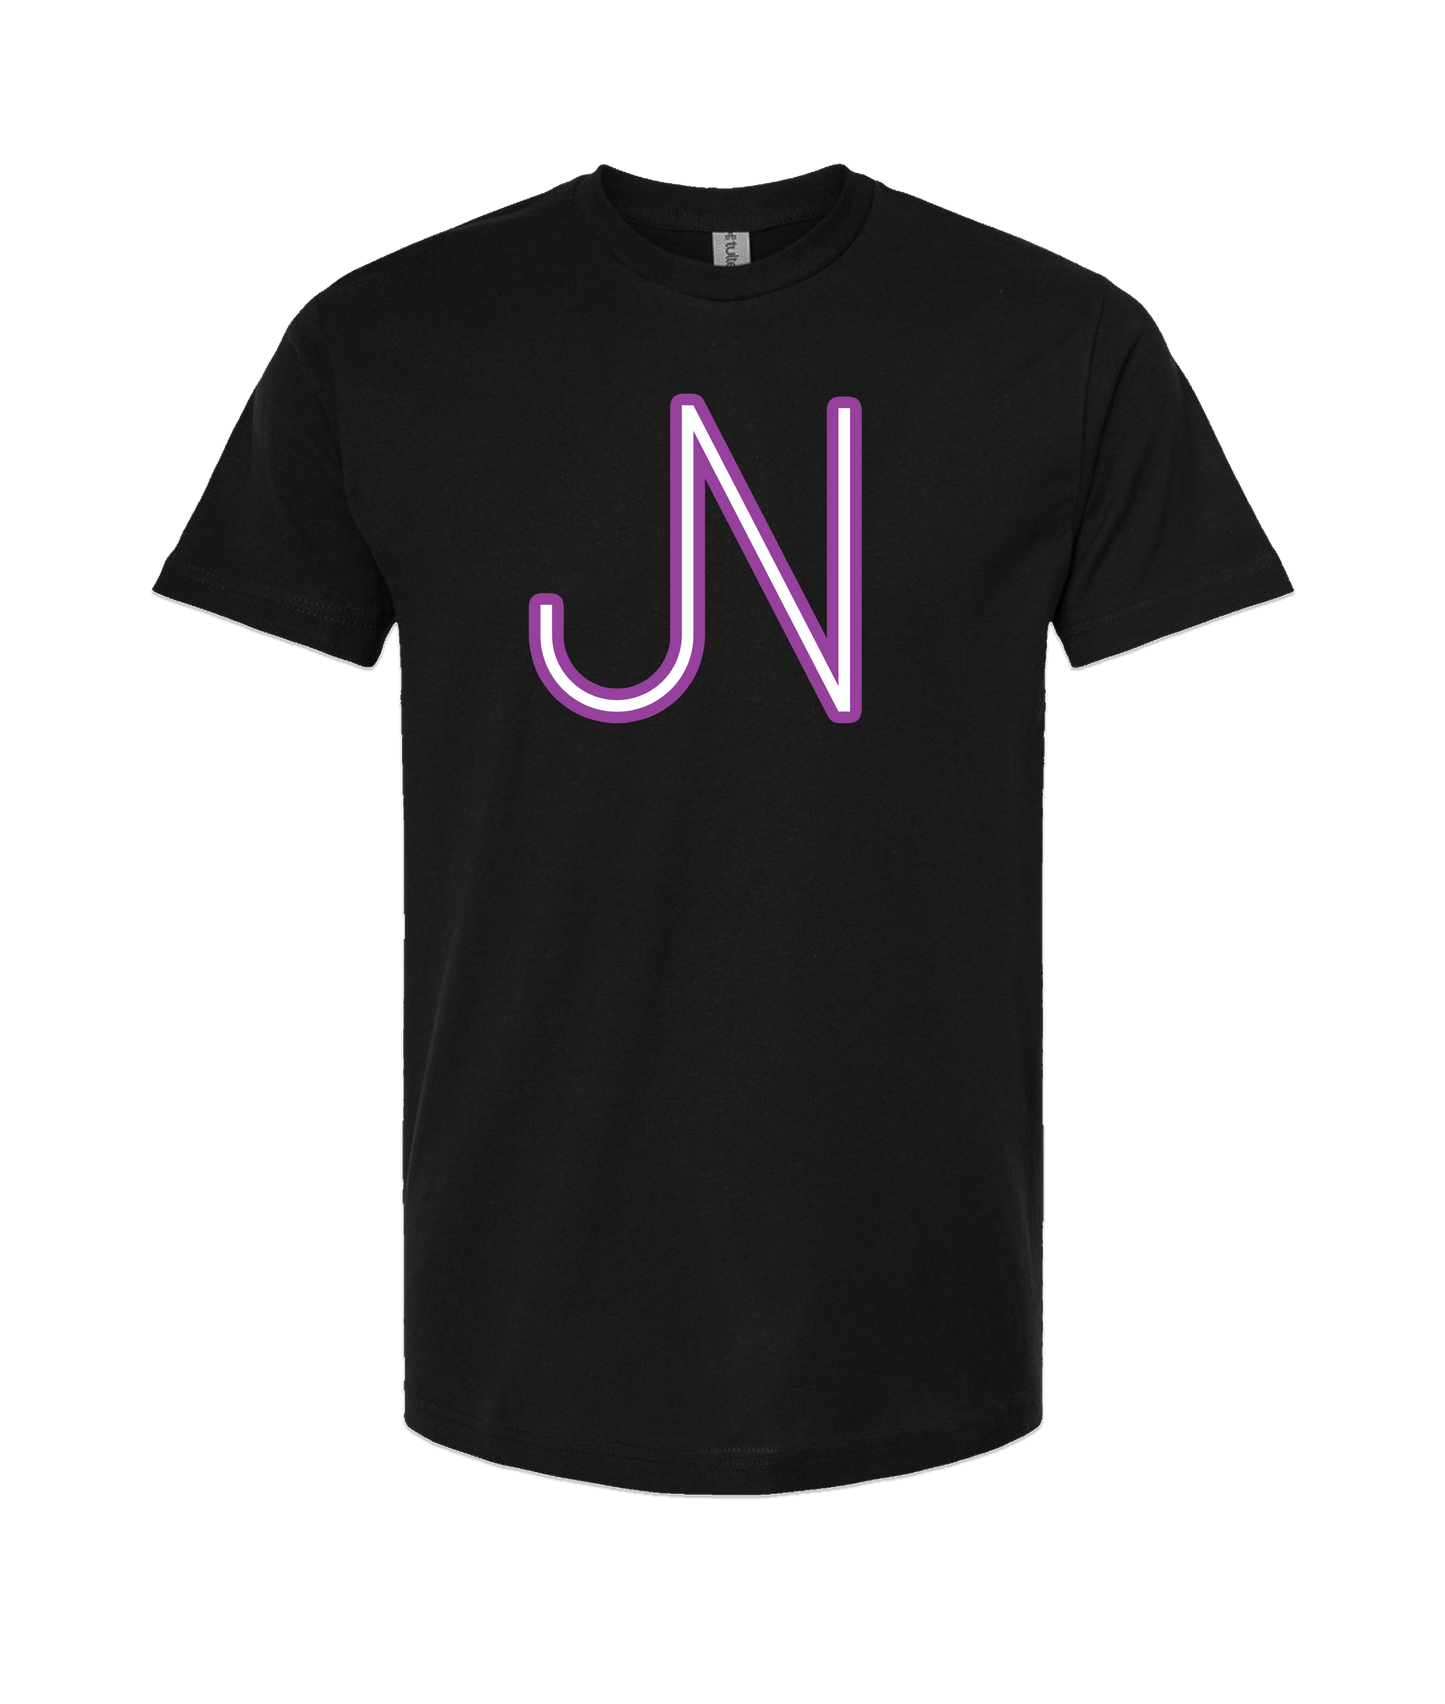 James Neary Music - JN (purple) - Black T-Shirt